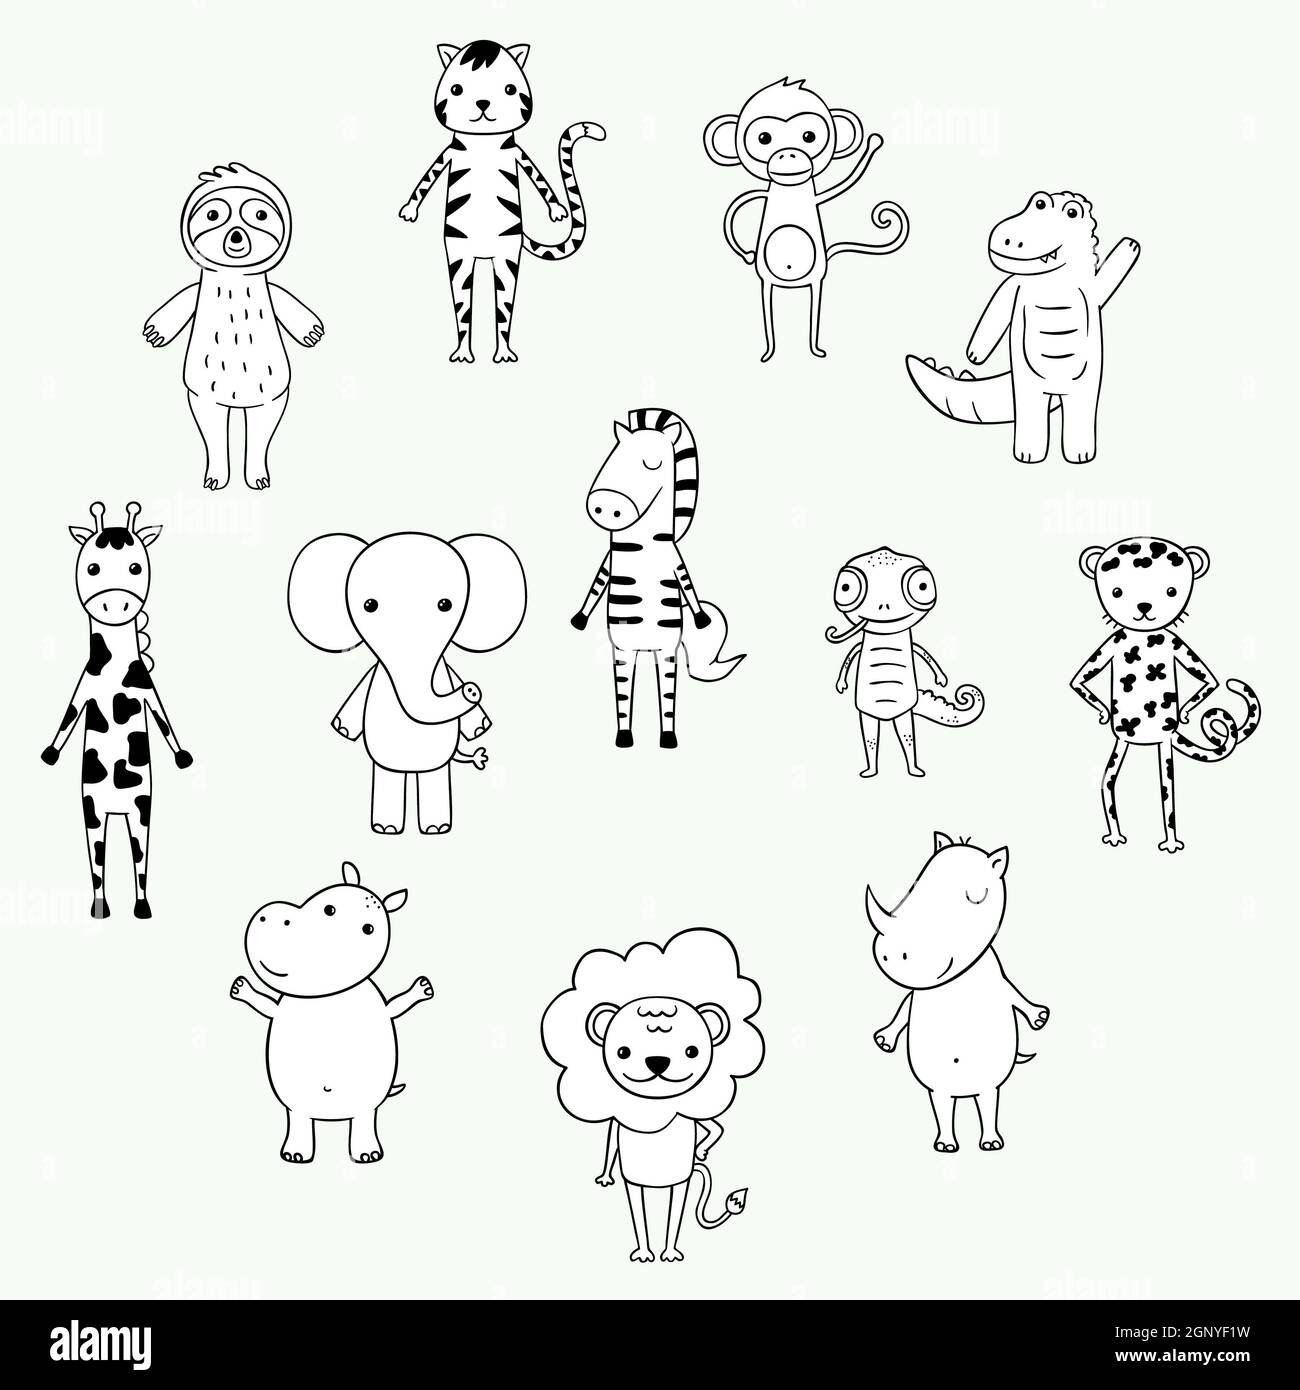 Cute jungle and safari animals. Hand drawn cartoon zoo characters. Elephant, lion, sloth, monkey, zebra, giraffe. Black and white. Stock Photo